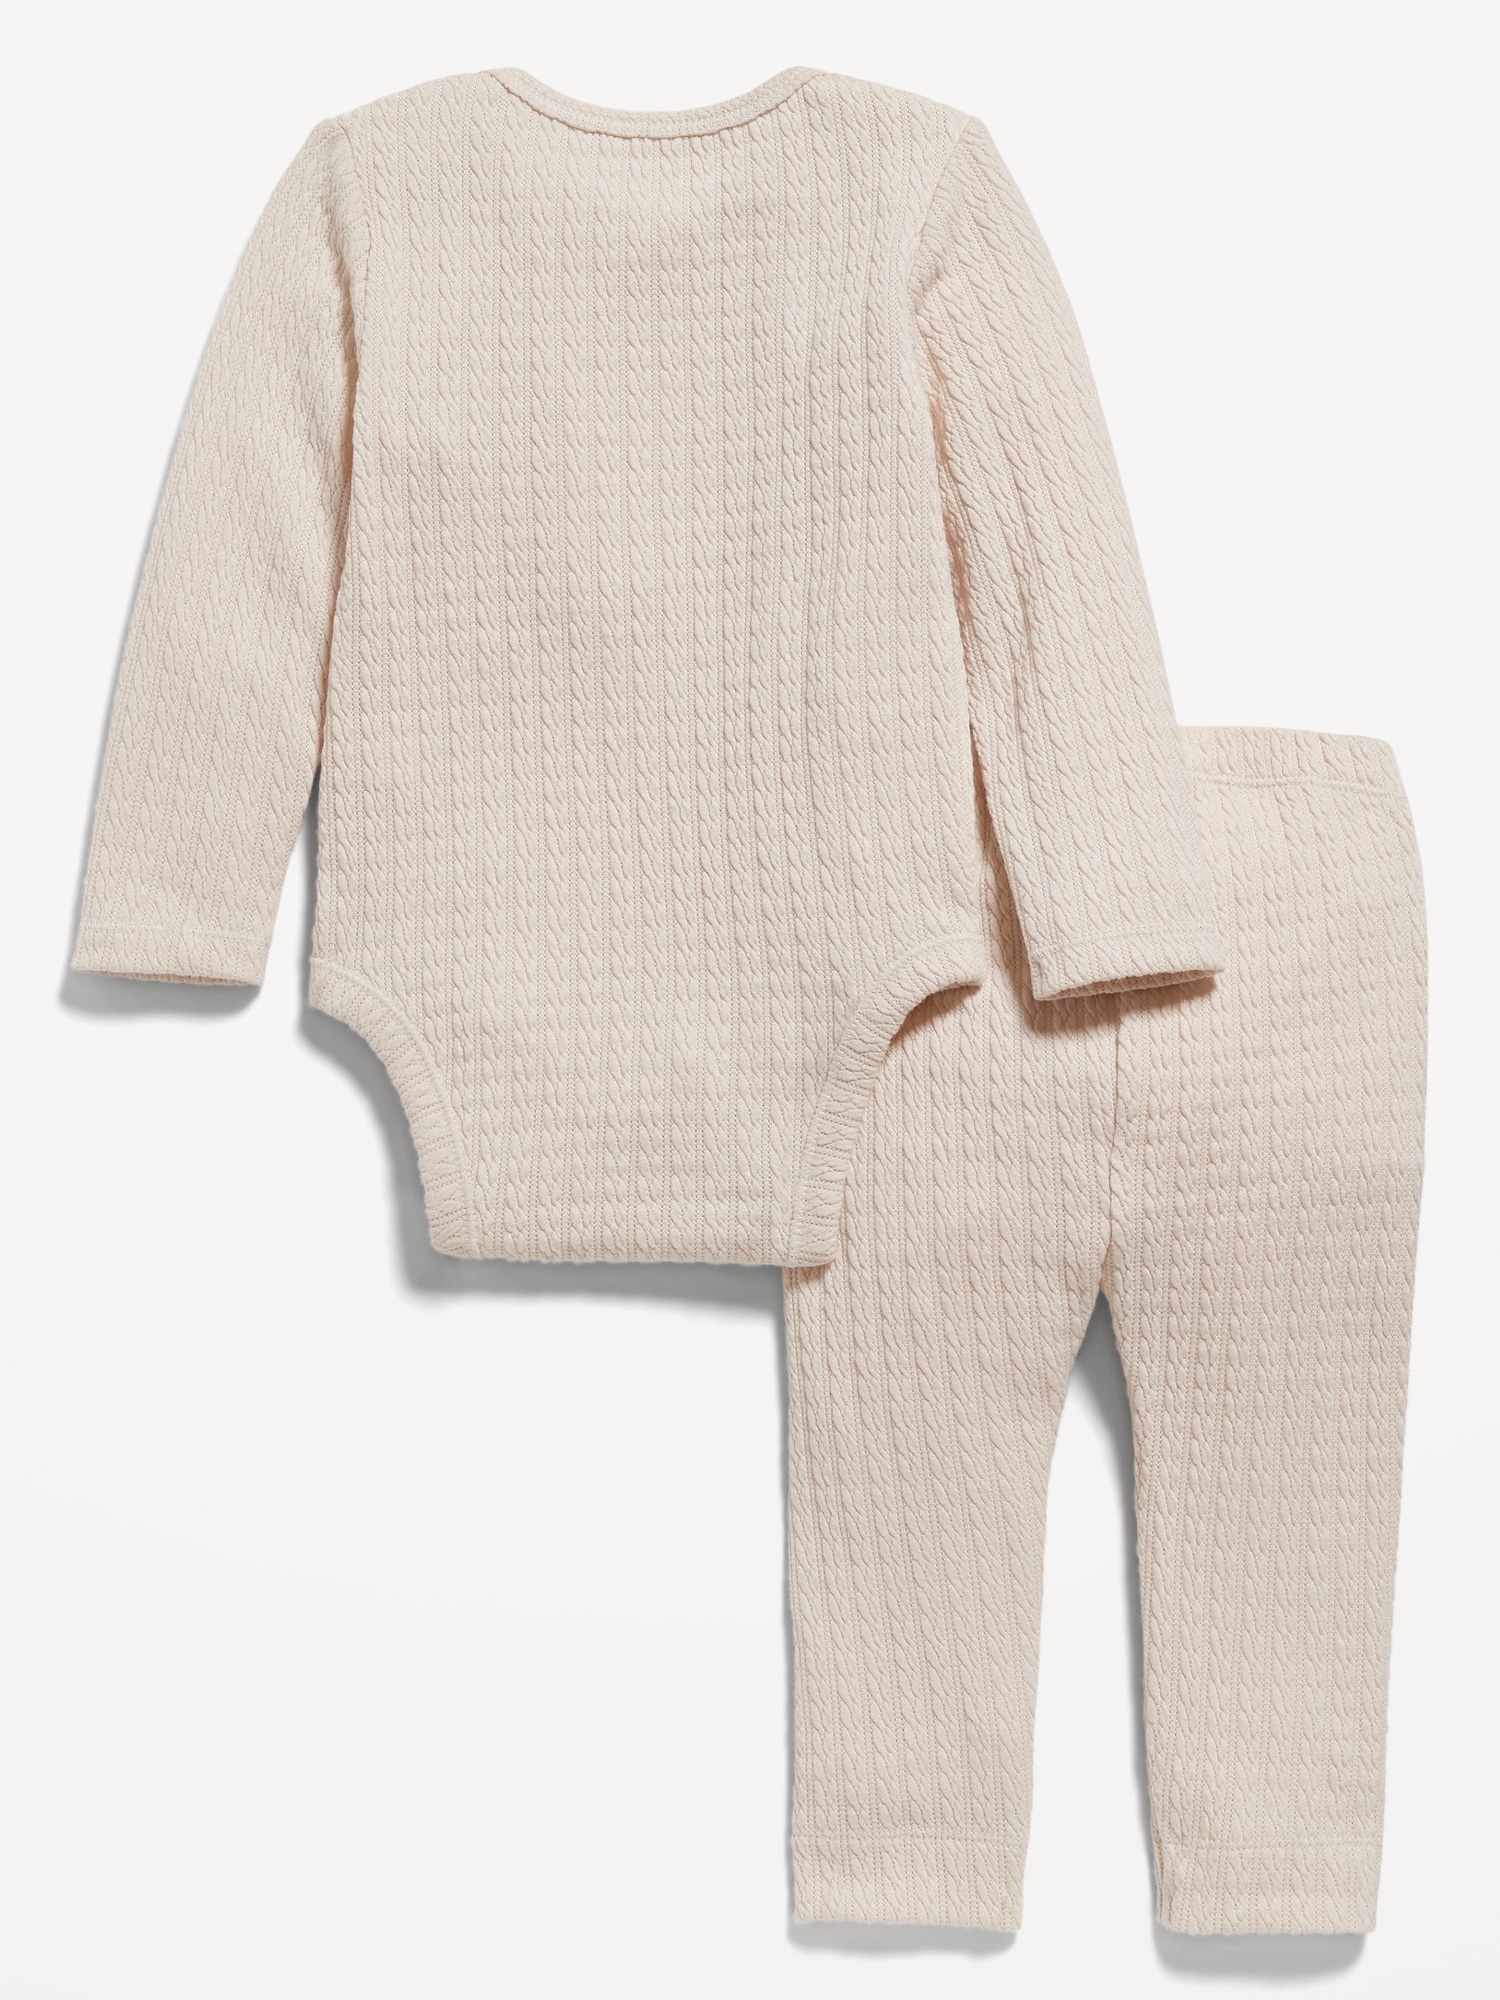 Unisex Jacquard-Knit Bodysuit & Pants Set for Baby | Old Navy